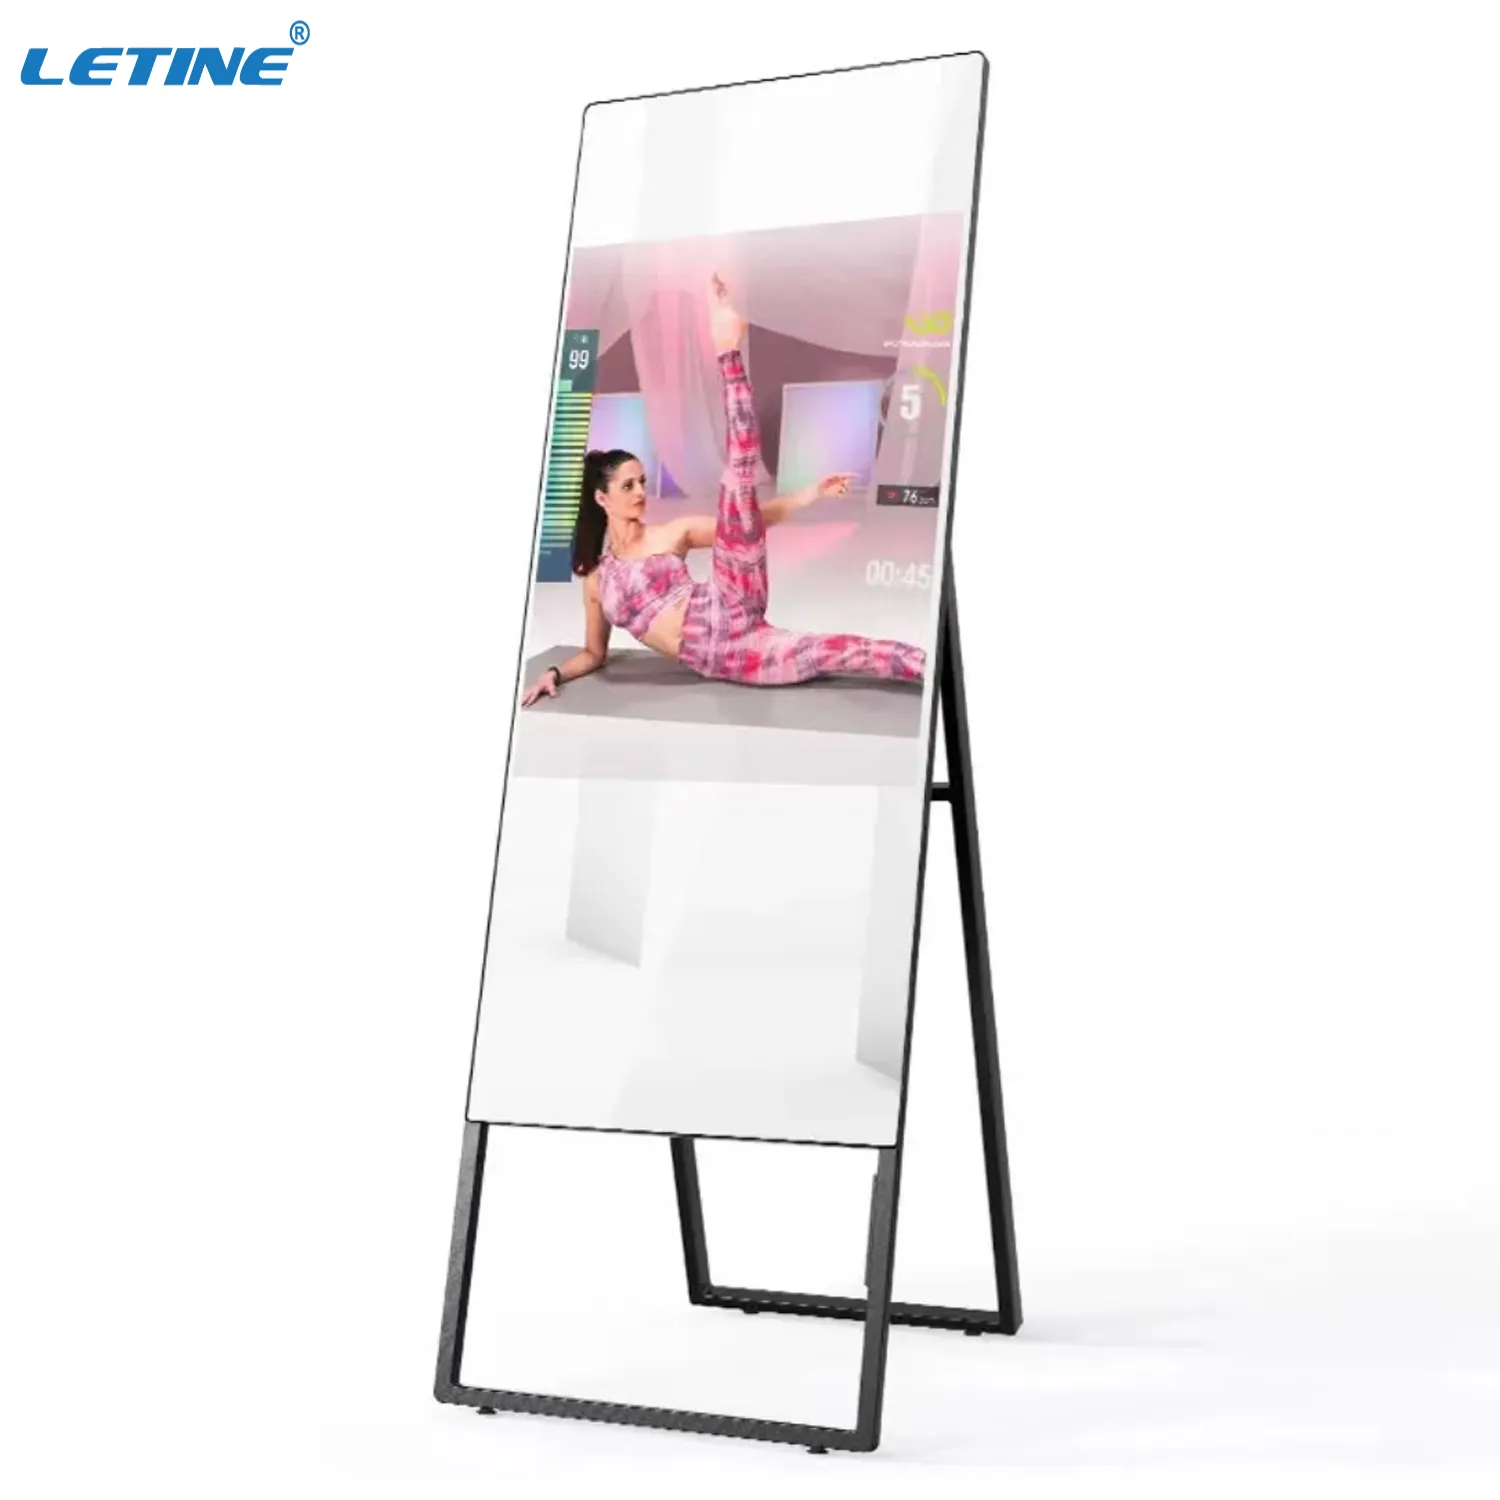 Ayna su marka Shenzhen reklam makinesi dikey reklam makinesi hareket dijital oynatıcı